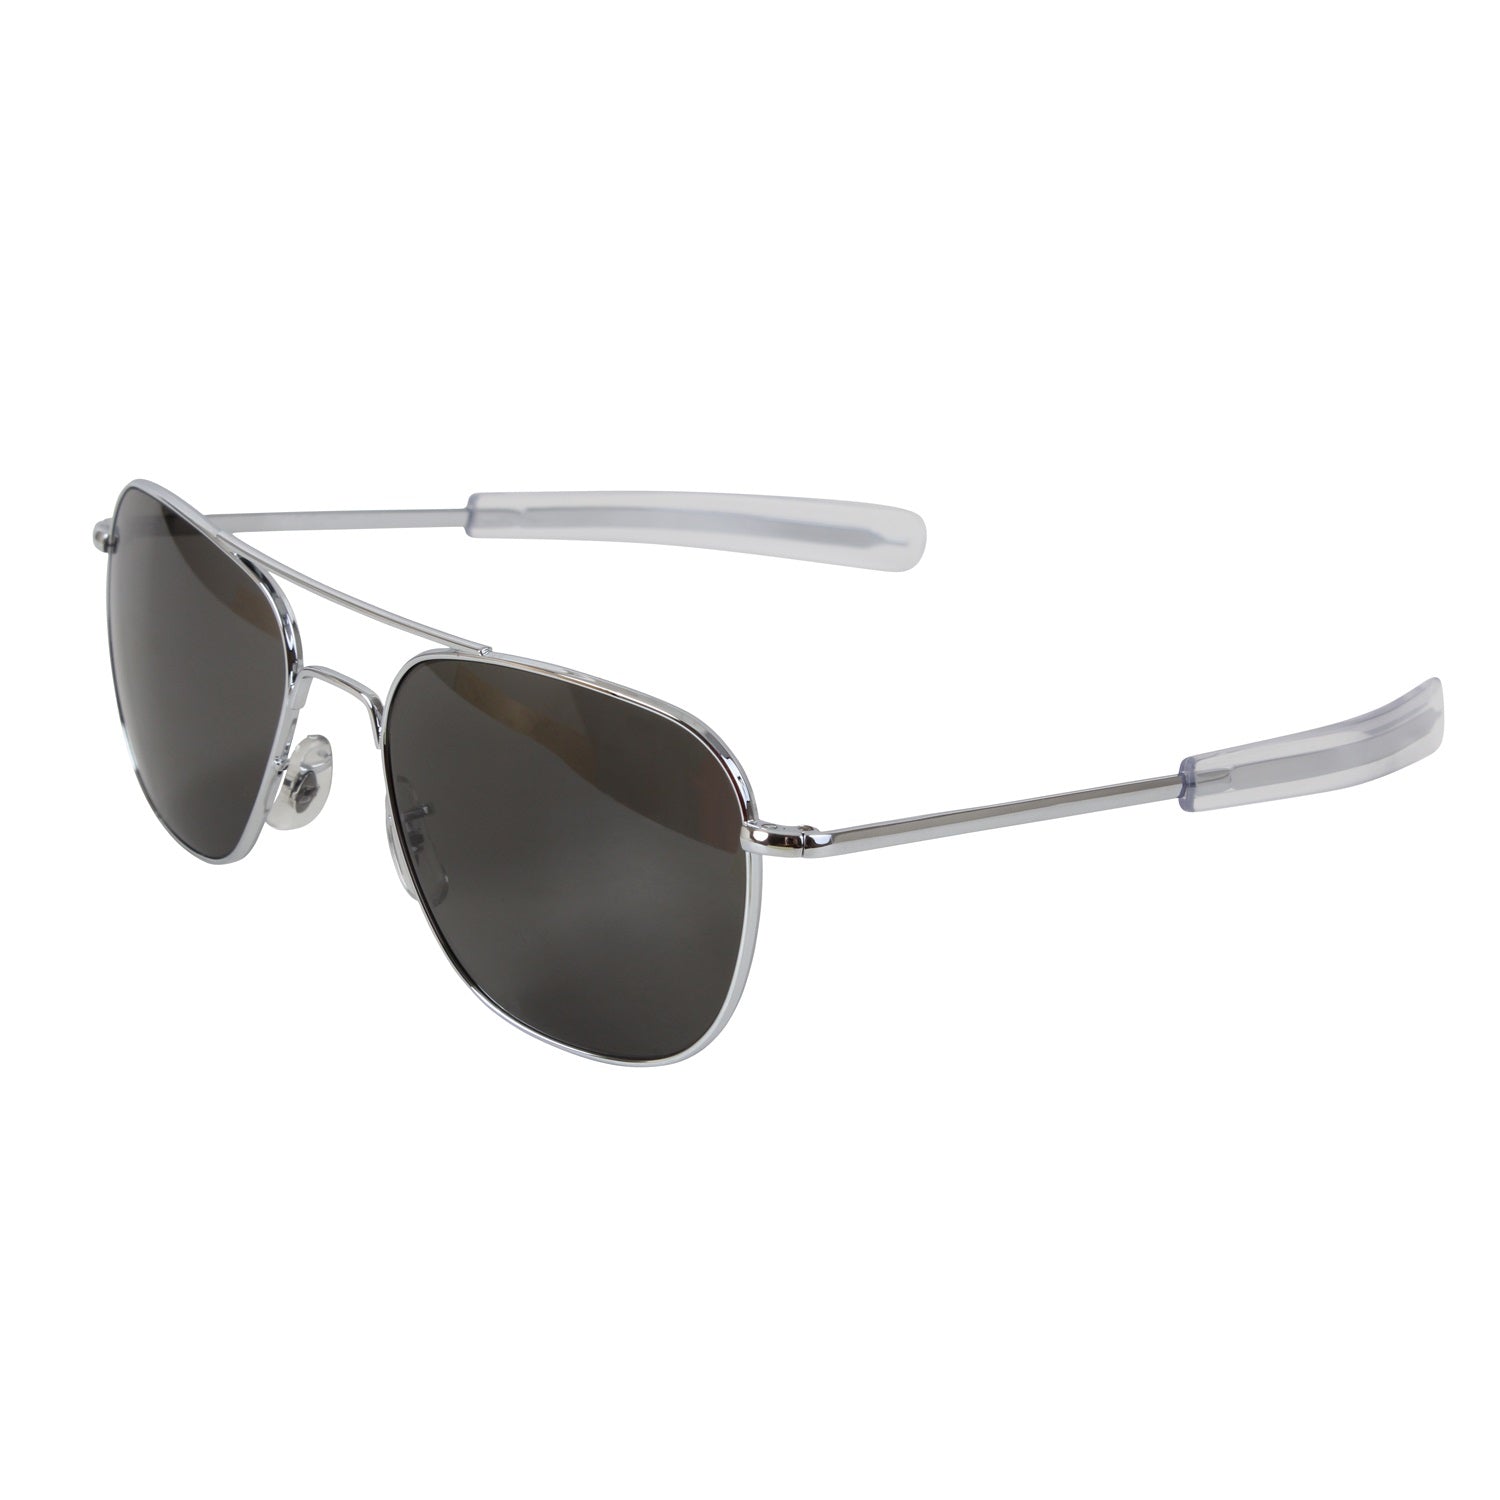 Rothco AO Eyewear Original Pilots Sunglasses